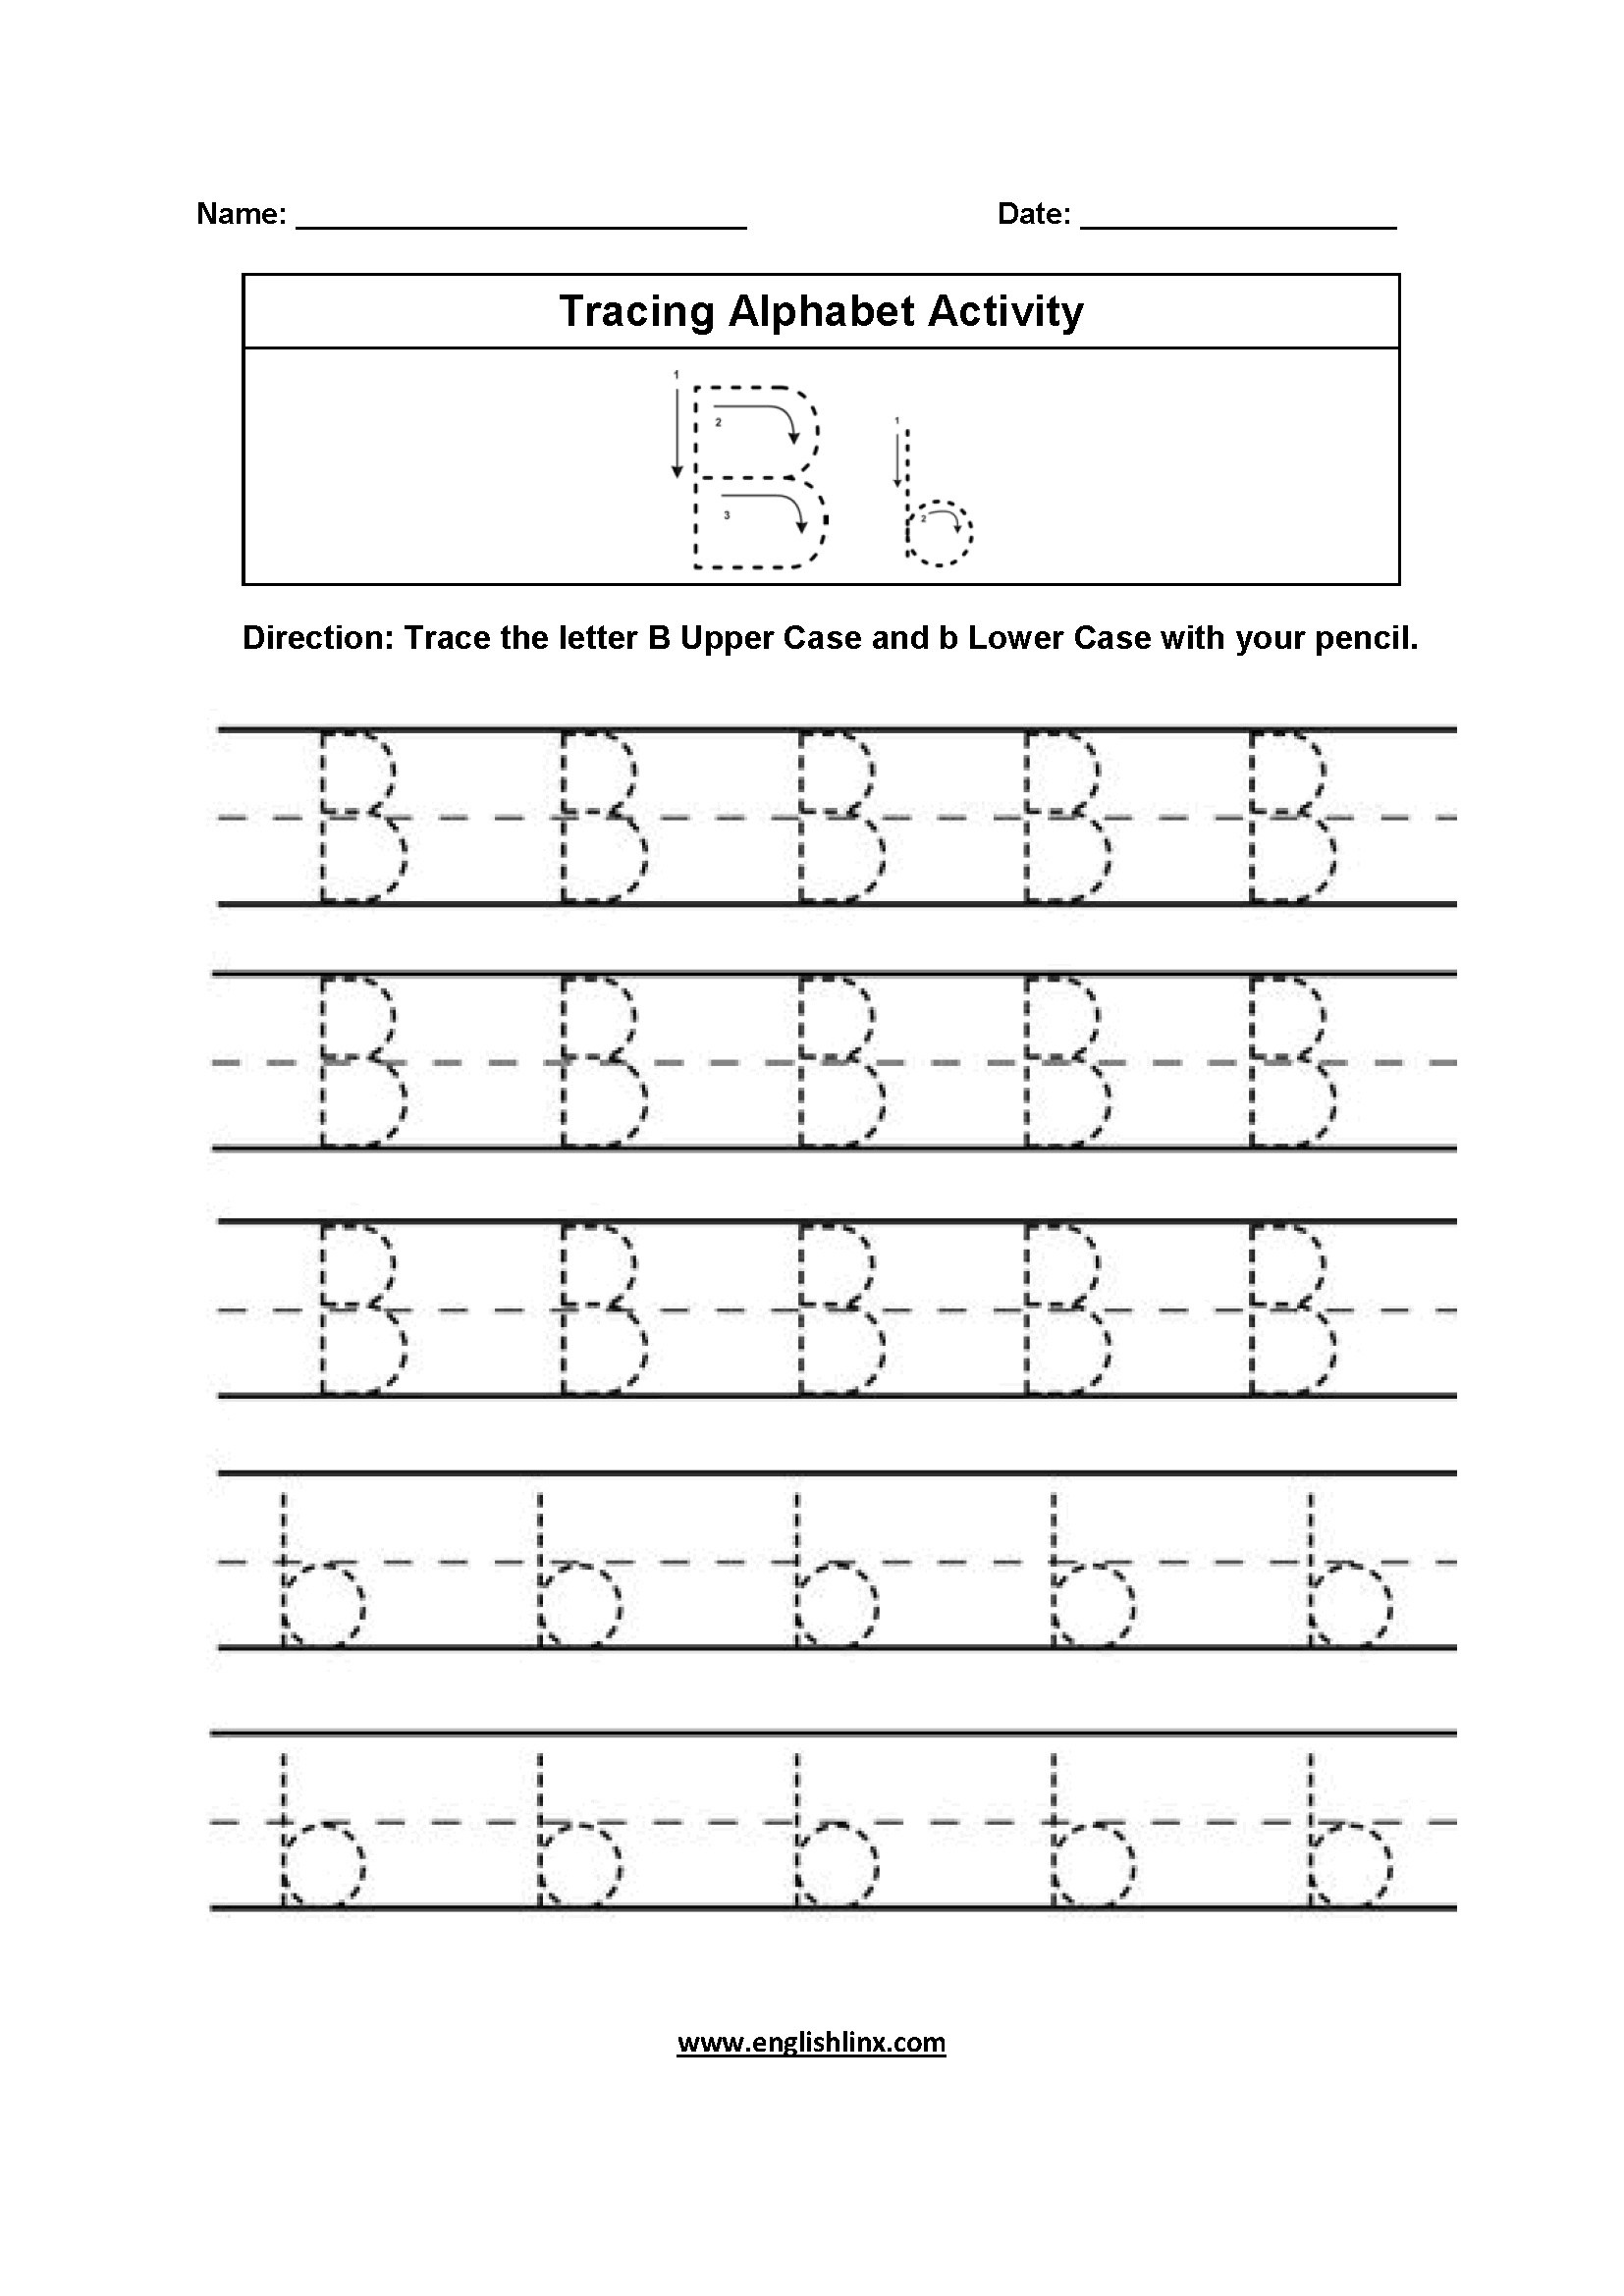 Worksheet ~ Worksheet Alphabeting For Preschool And Vector intended for Alphabet B Tracing Worksheet